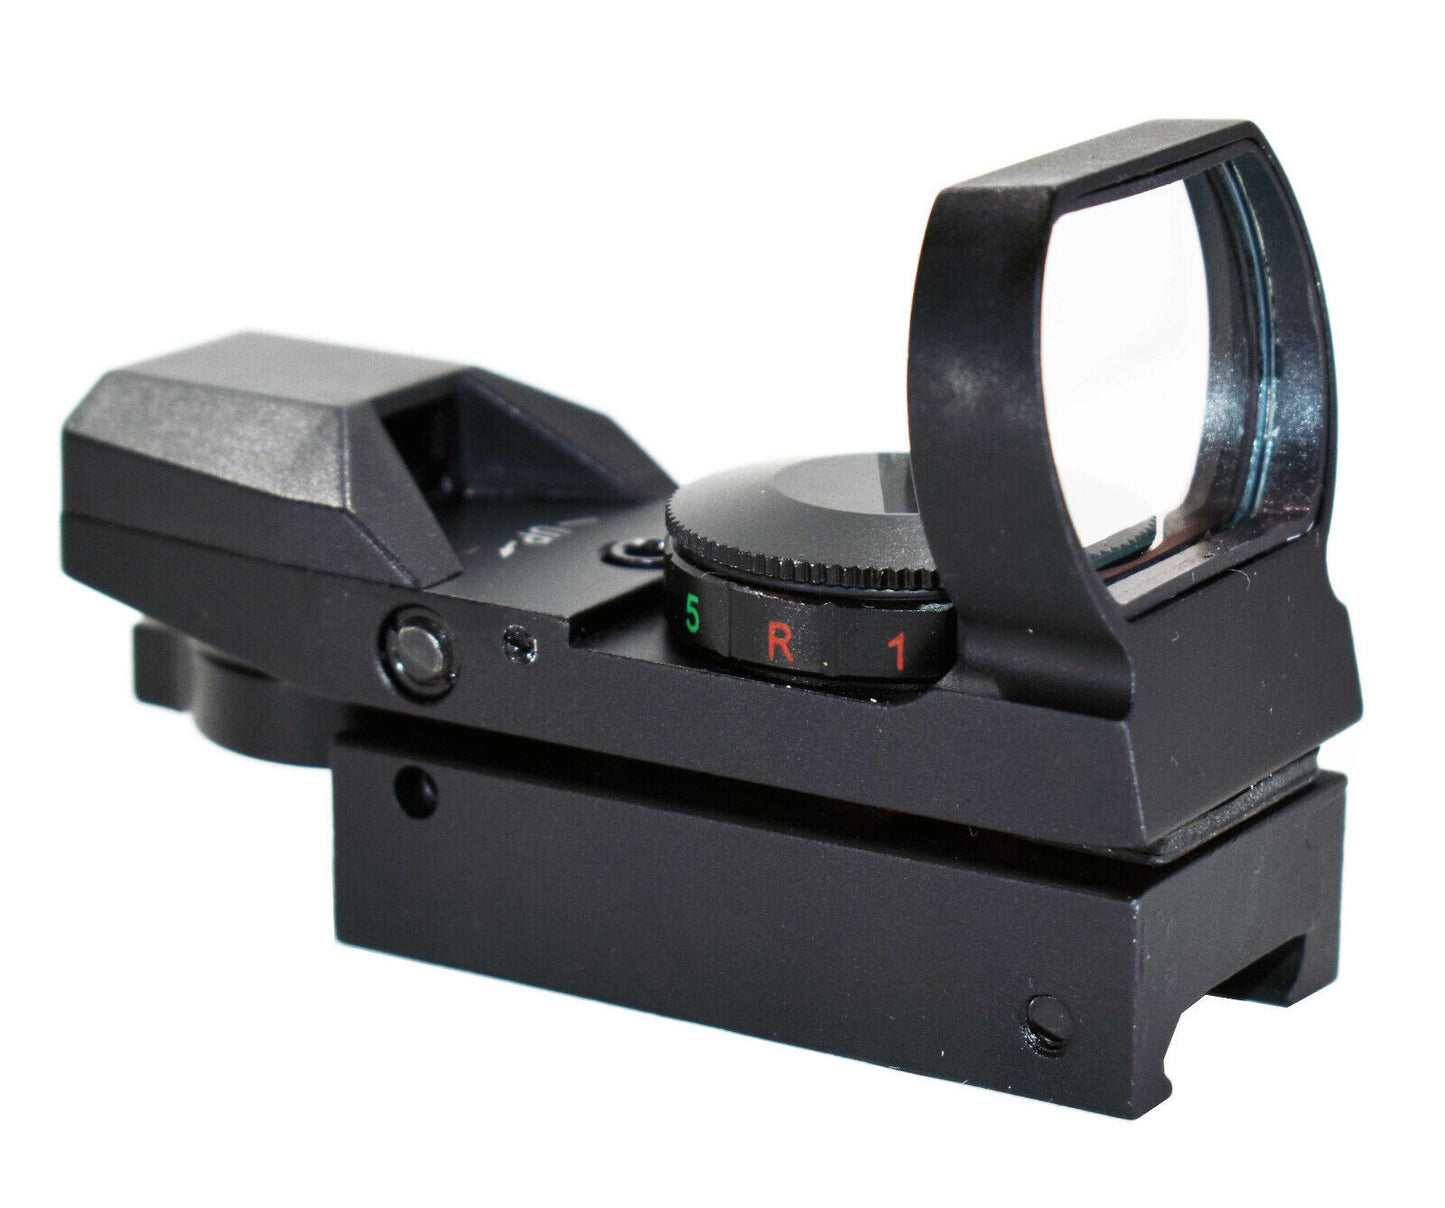 Stoeger M3000 pump 12 gauge reflex sight with base mount combo.